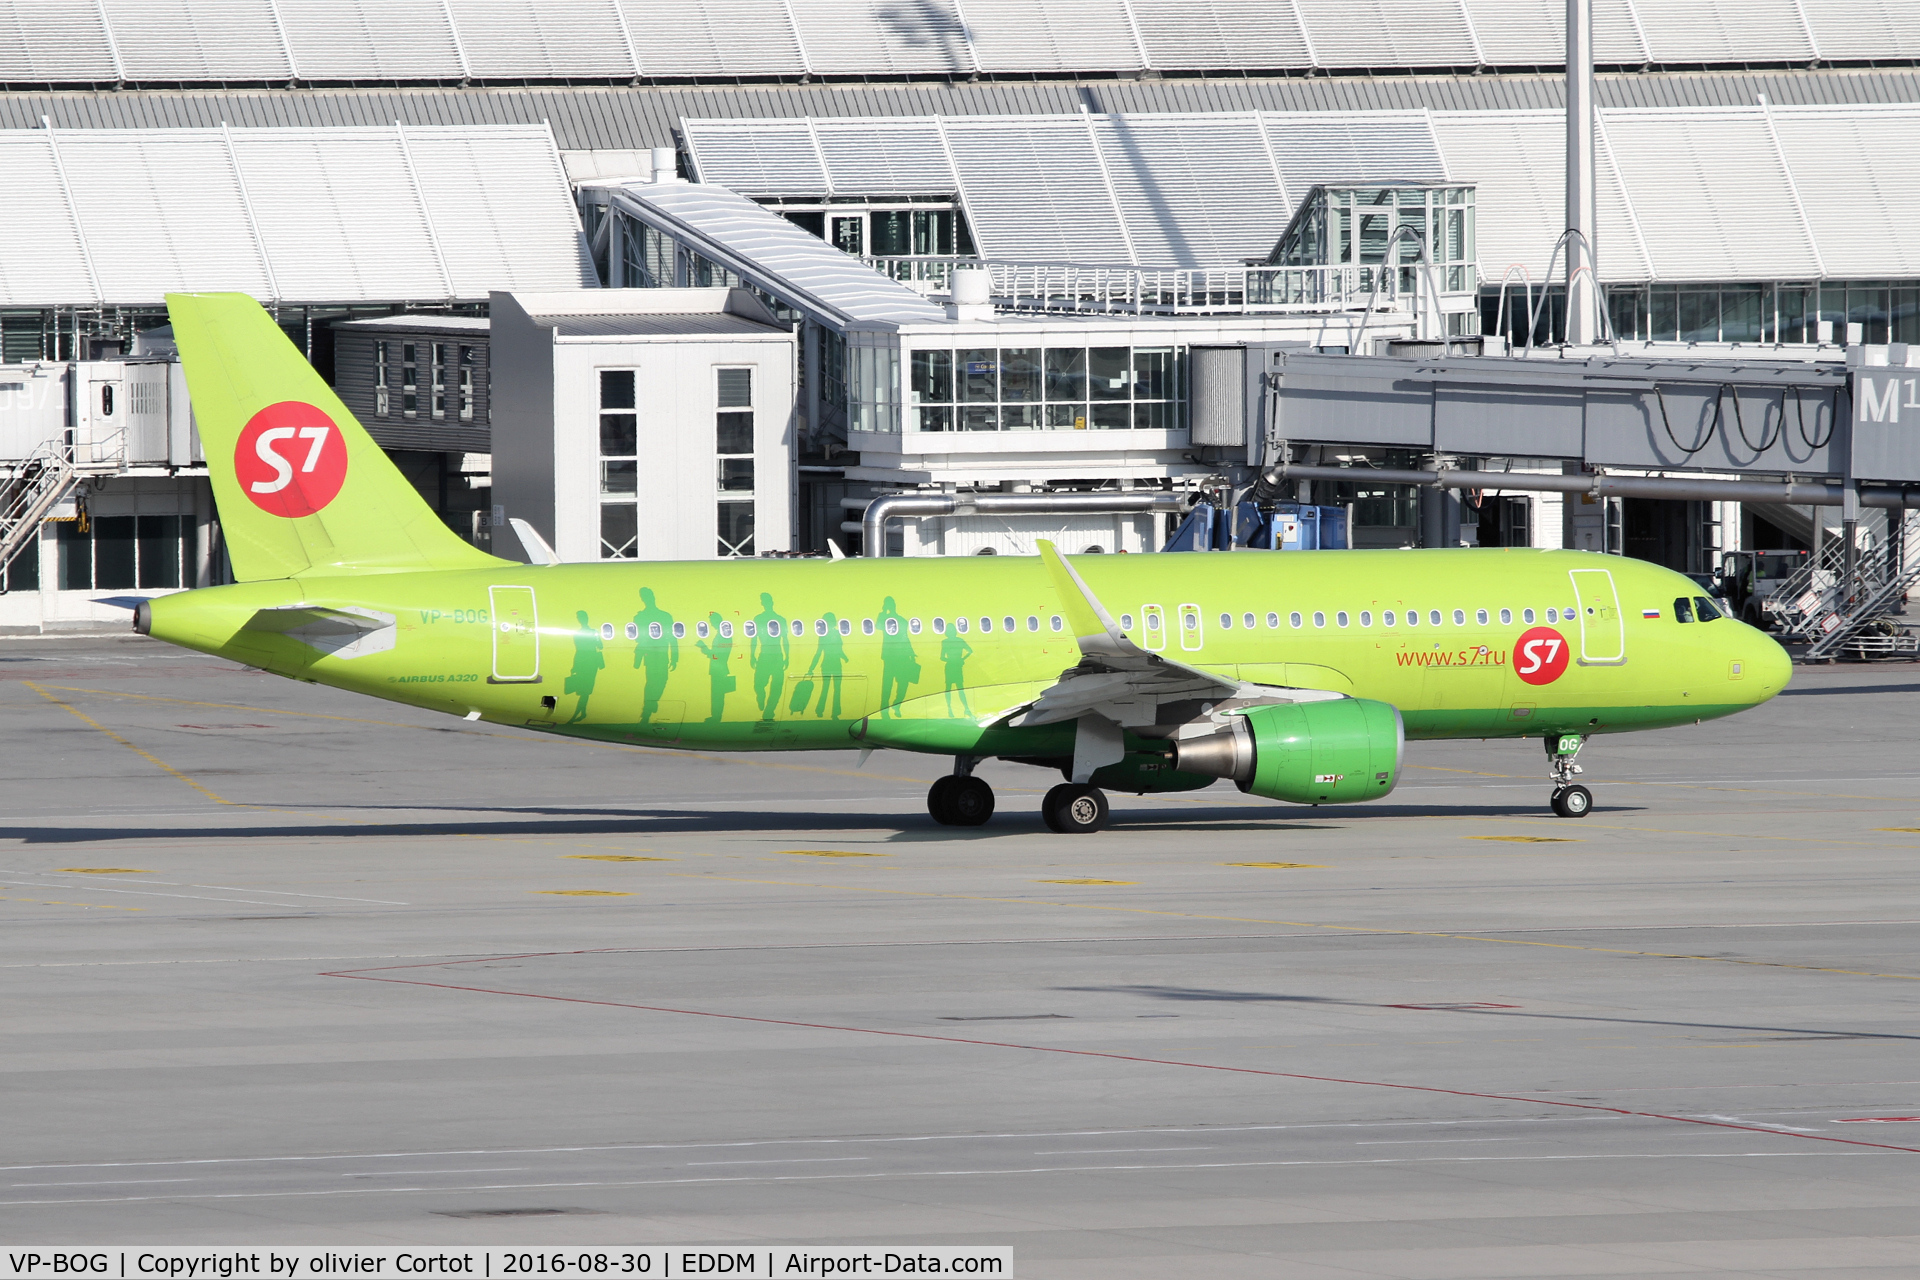 VP-BOG, 2013 Airbus A320-214 C/N 5559, Munich airport